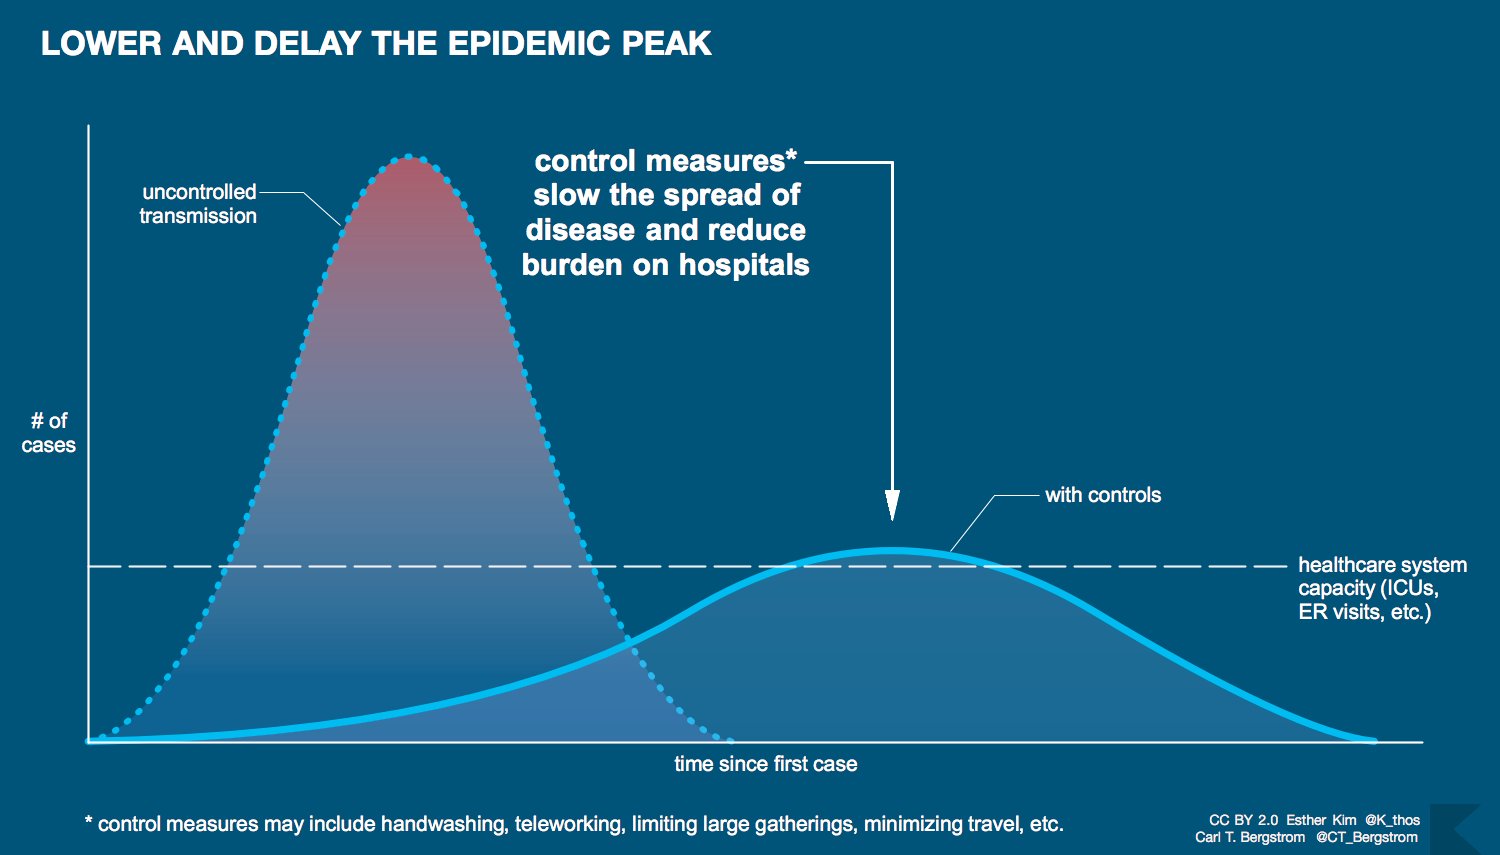 Reducing the epidemic peak